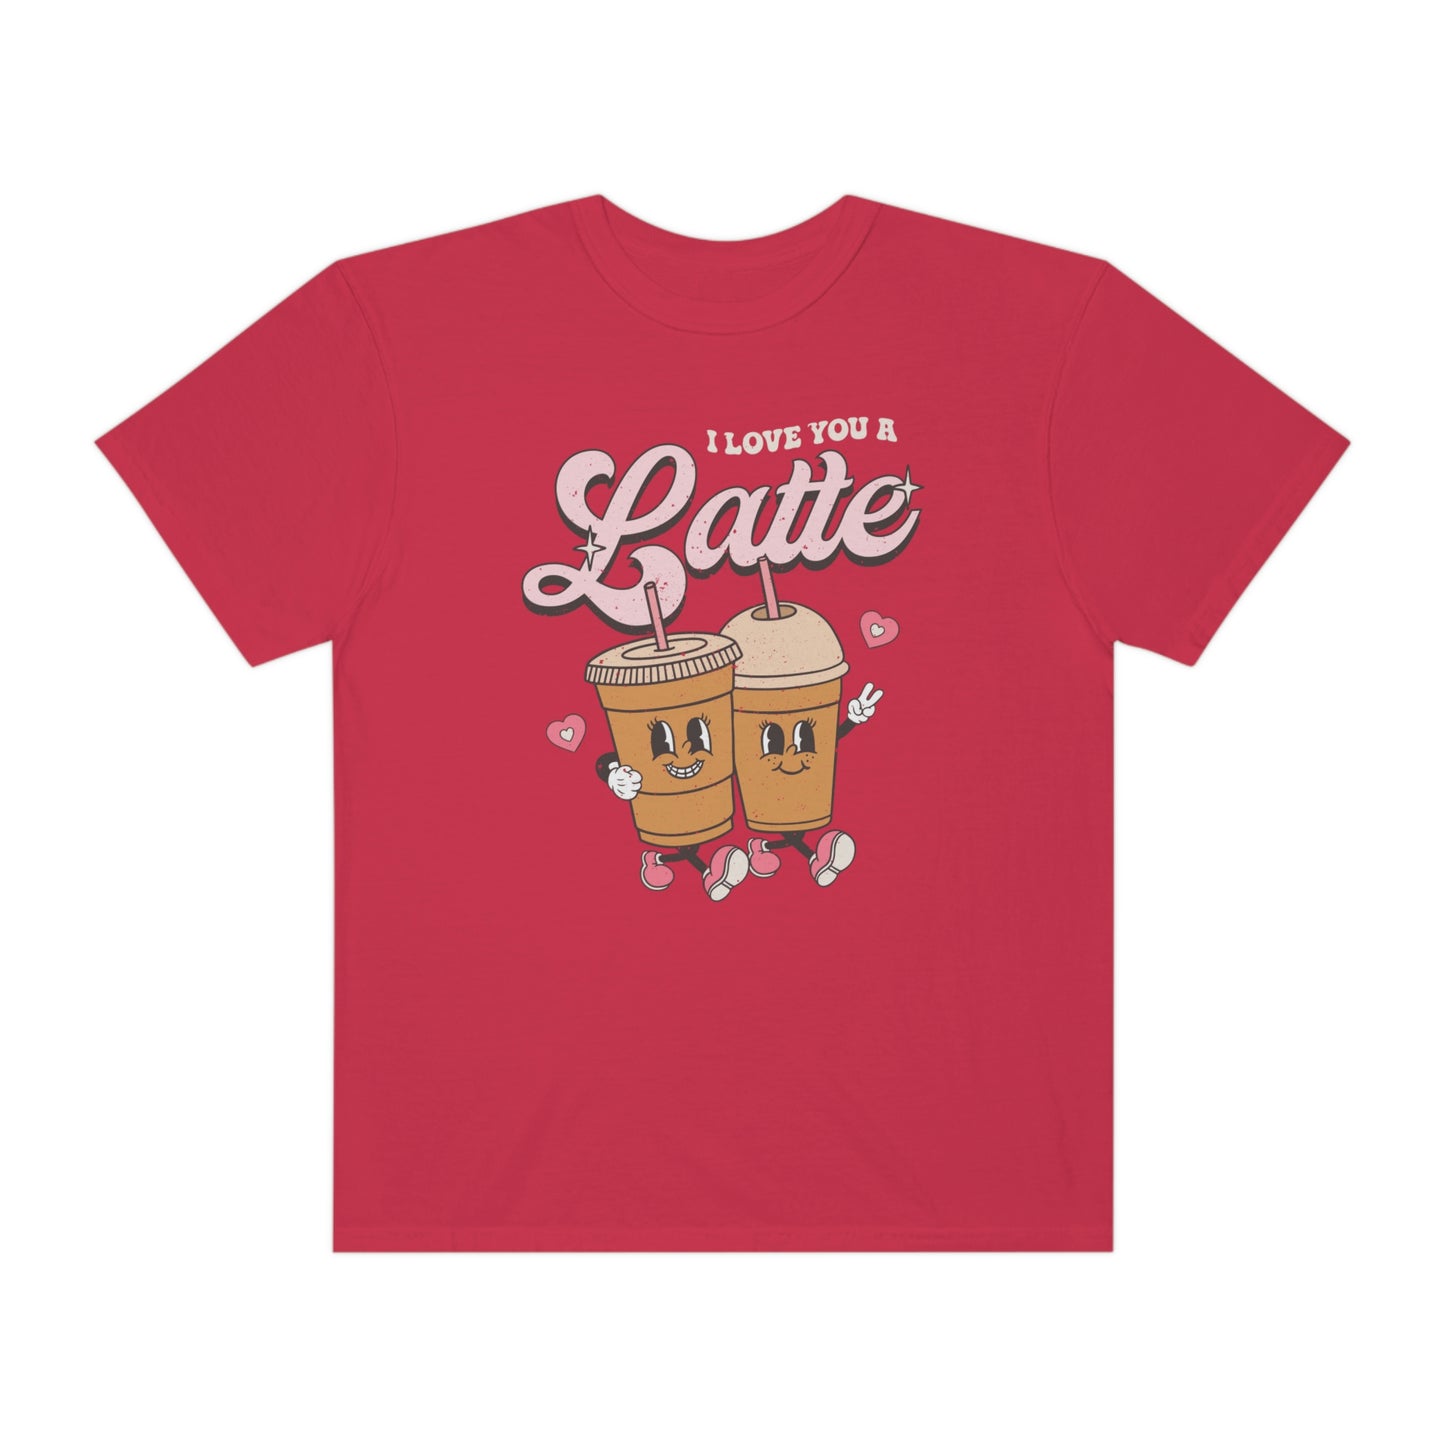 I Love You Latte Shirt